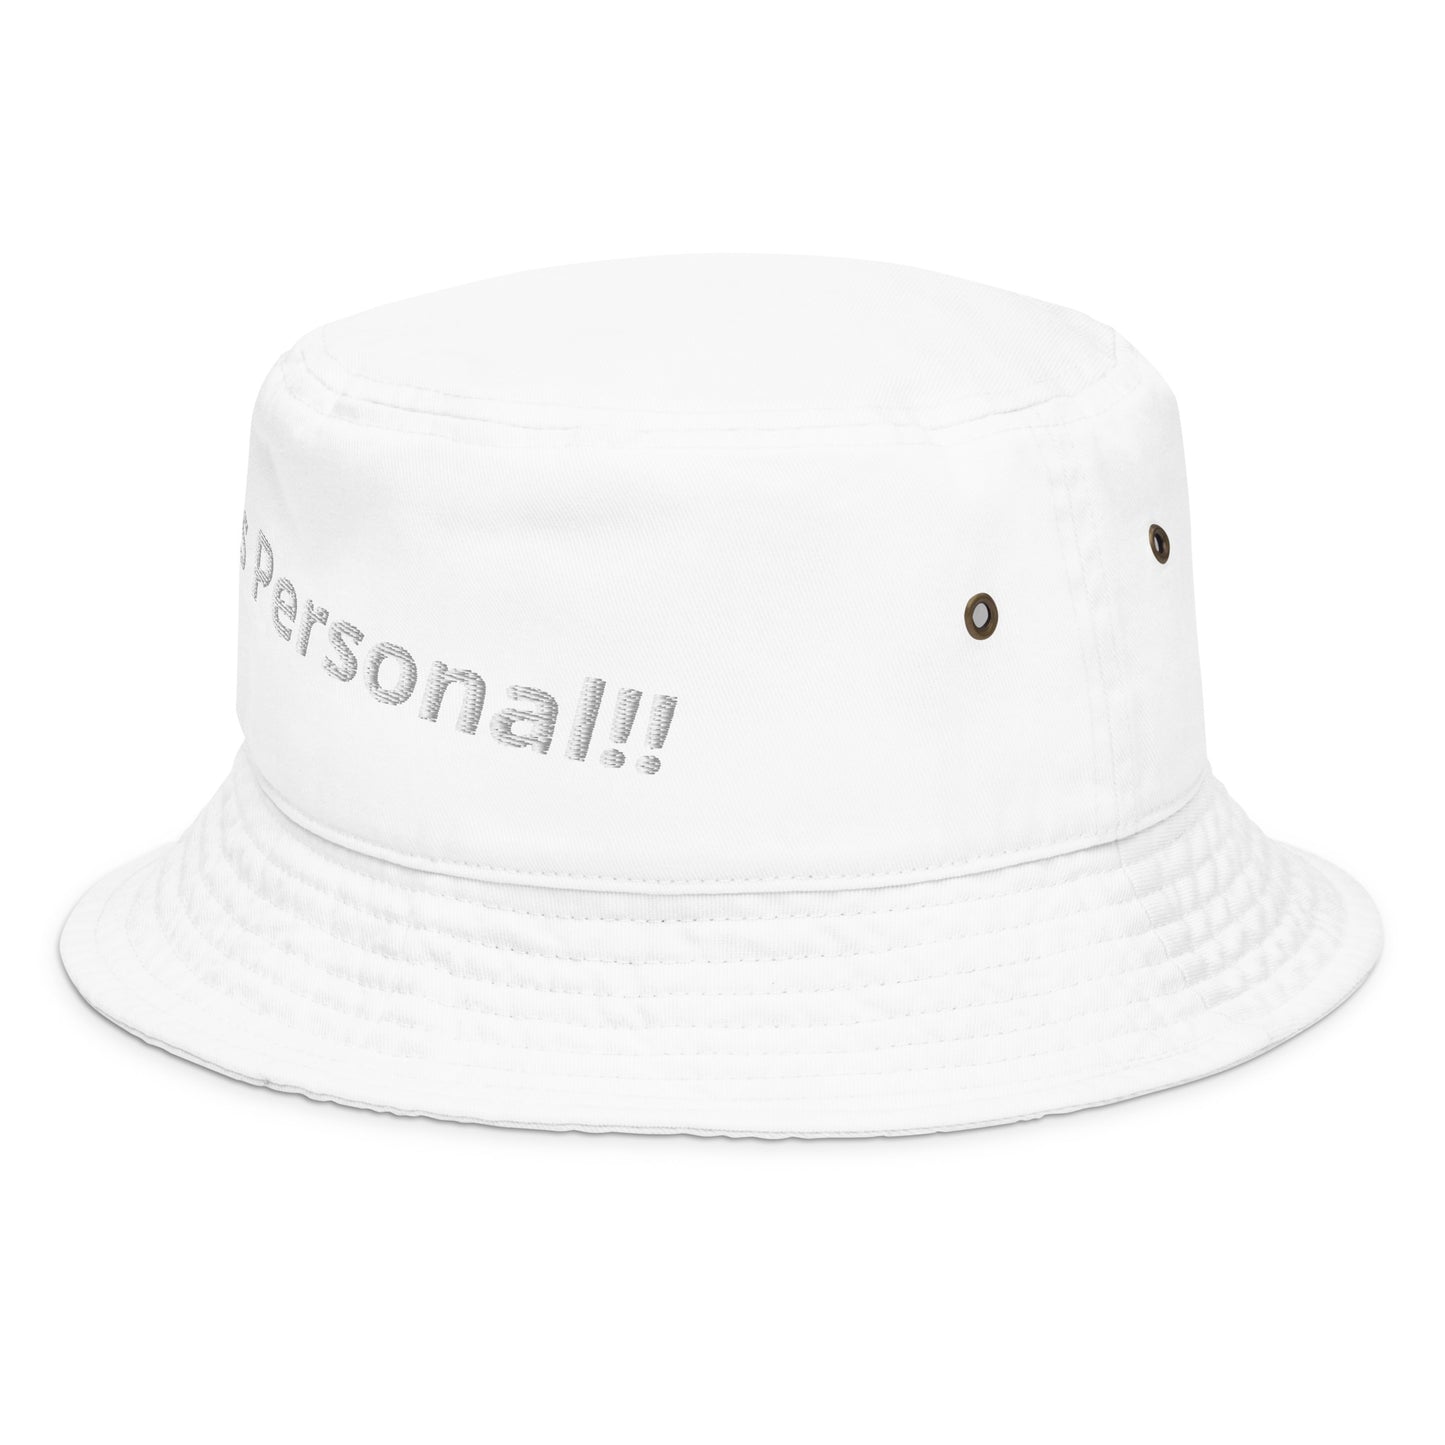 It's Personal!! Fashion bucket hat